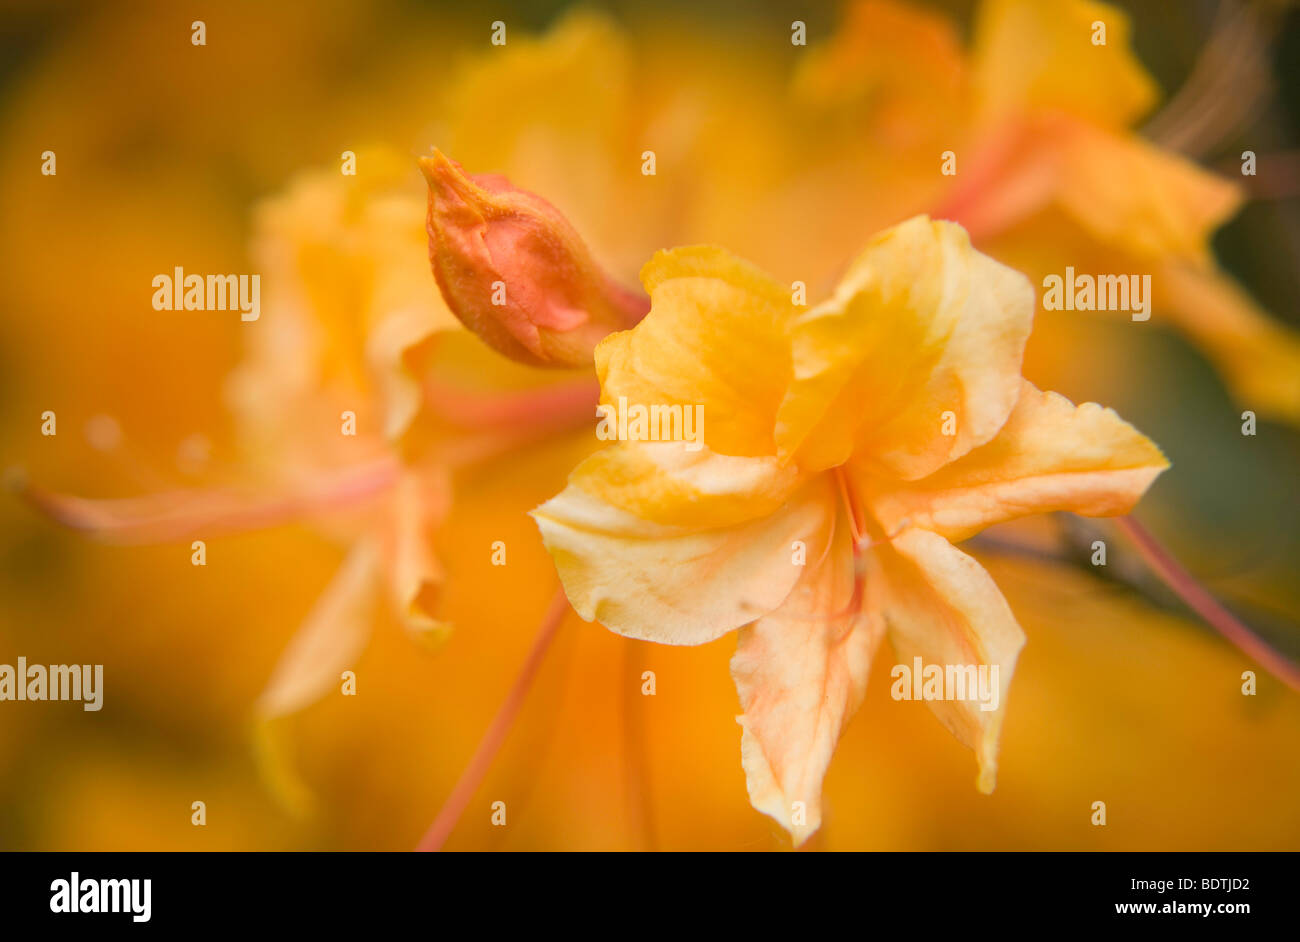 Close up of a orange-yellow azalea in full flower and an orange bud, UK Flora Stock Photo